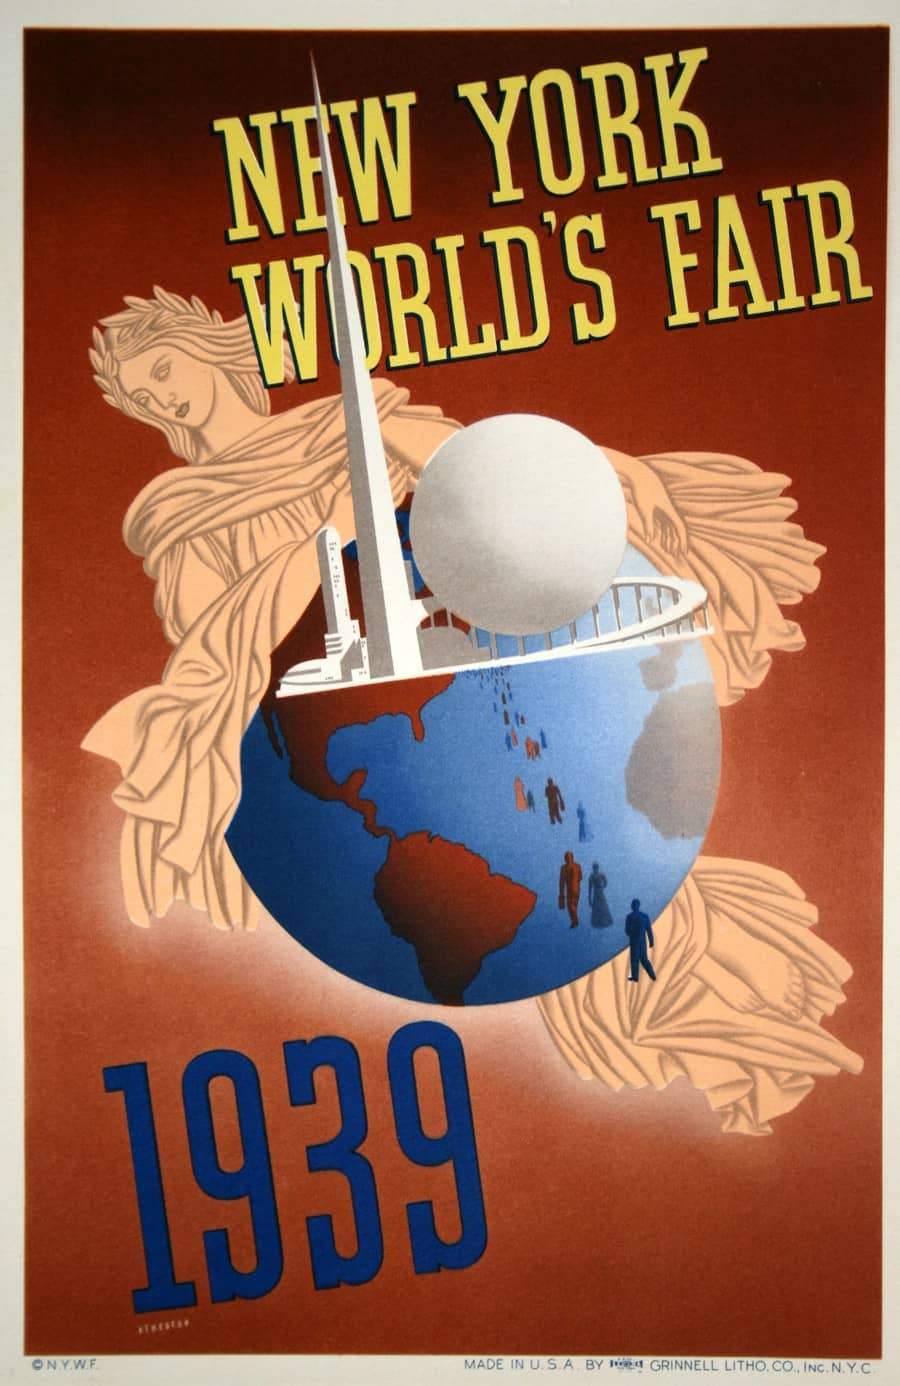 Original 1939 New York World's Fair Poster by  John Atherton